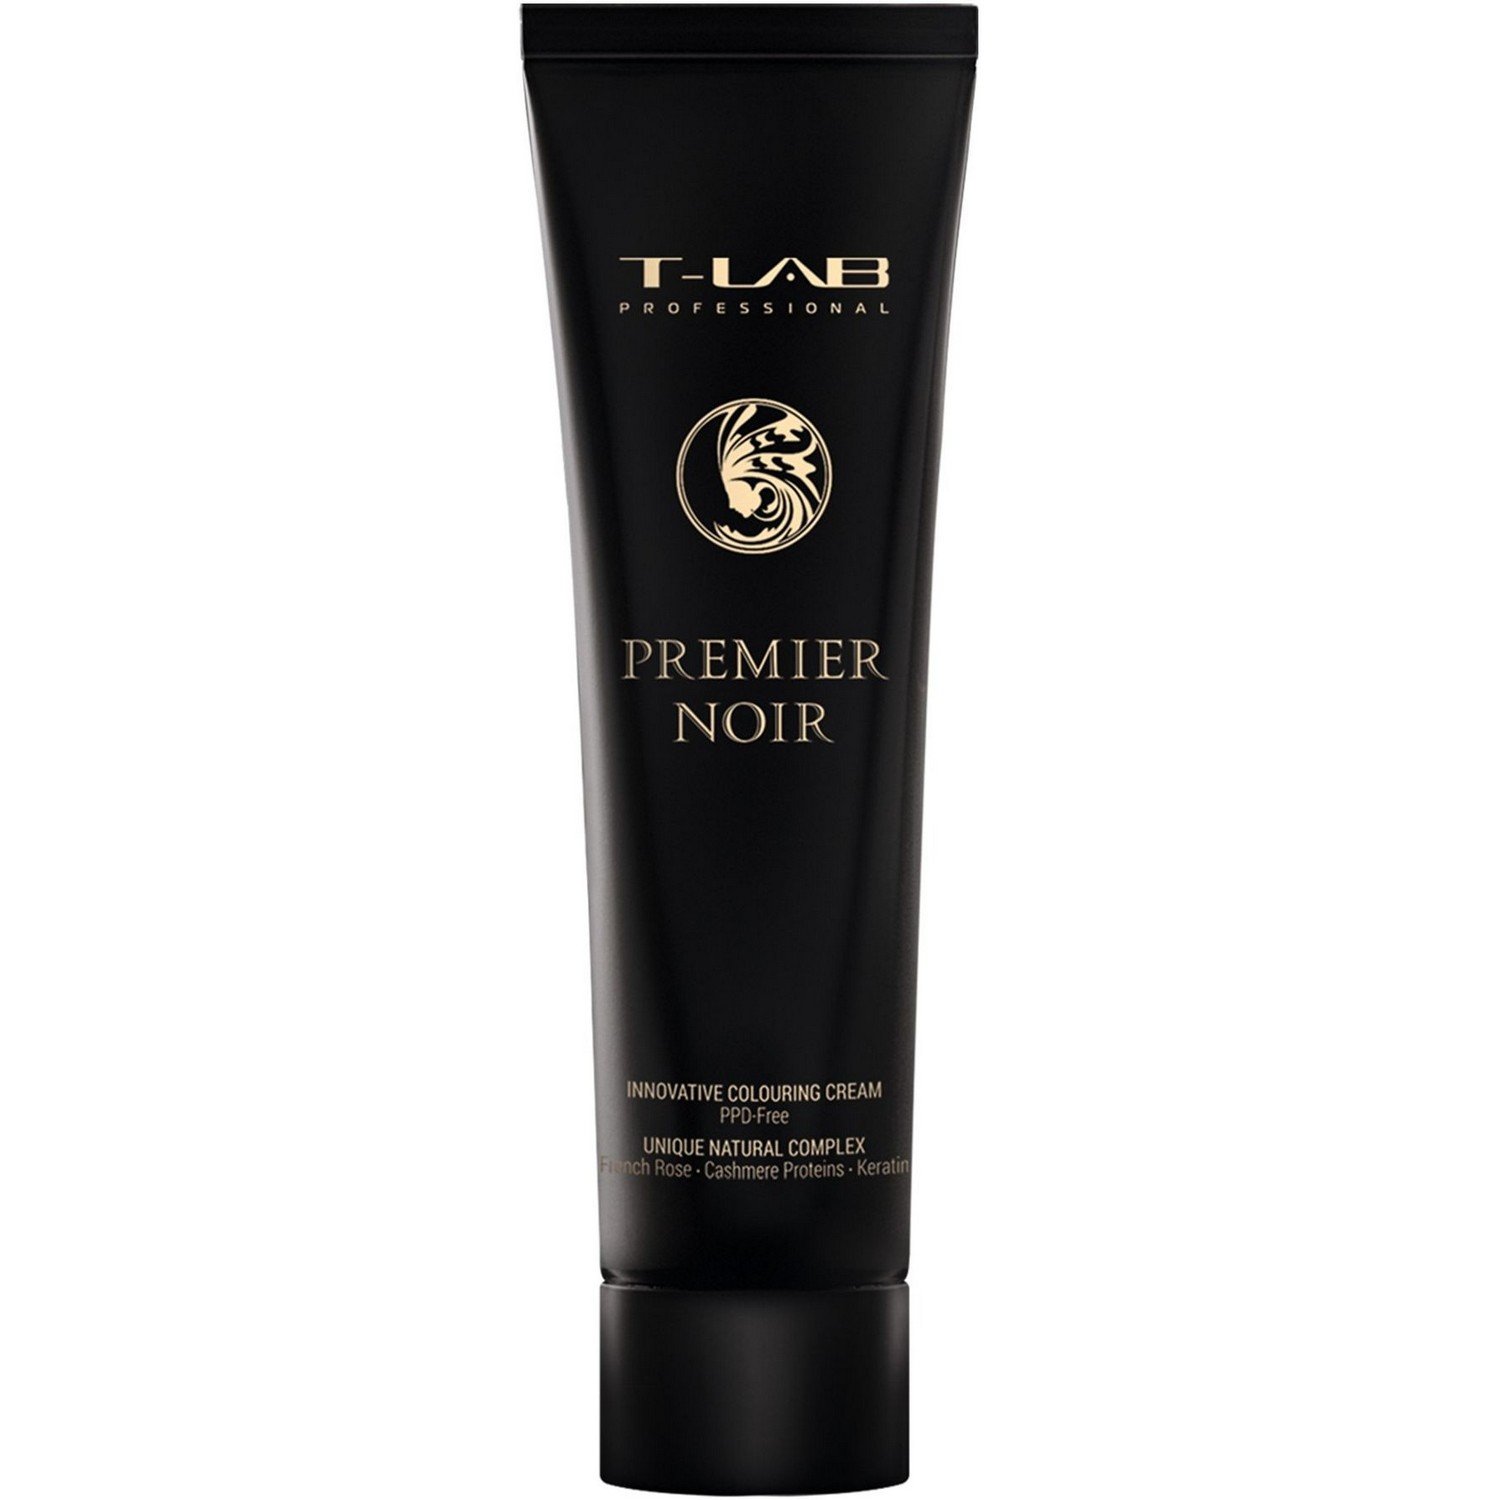 Крем-краска T-LAB Professional Premier Noir colouring cream, оттенок 5.15 (light ash mahogany brown) - фото 1